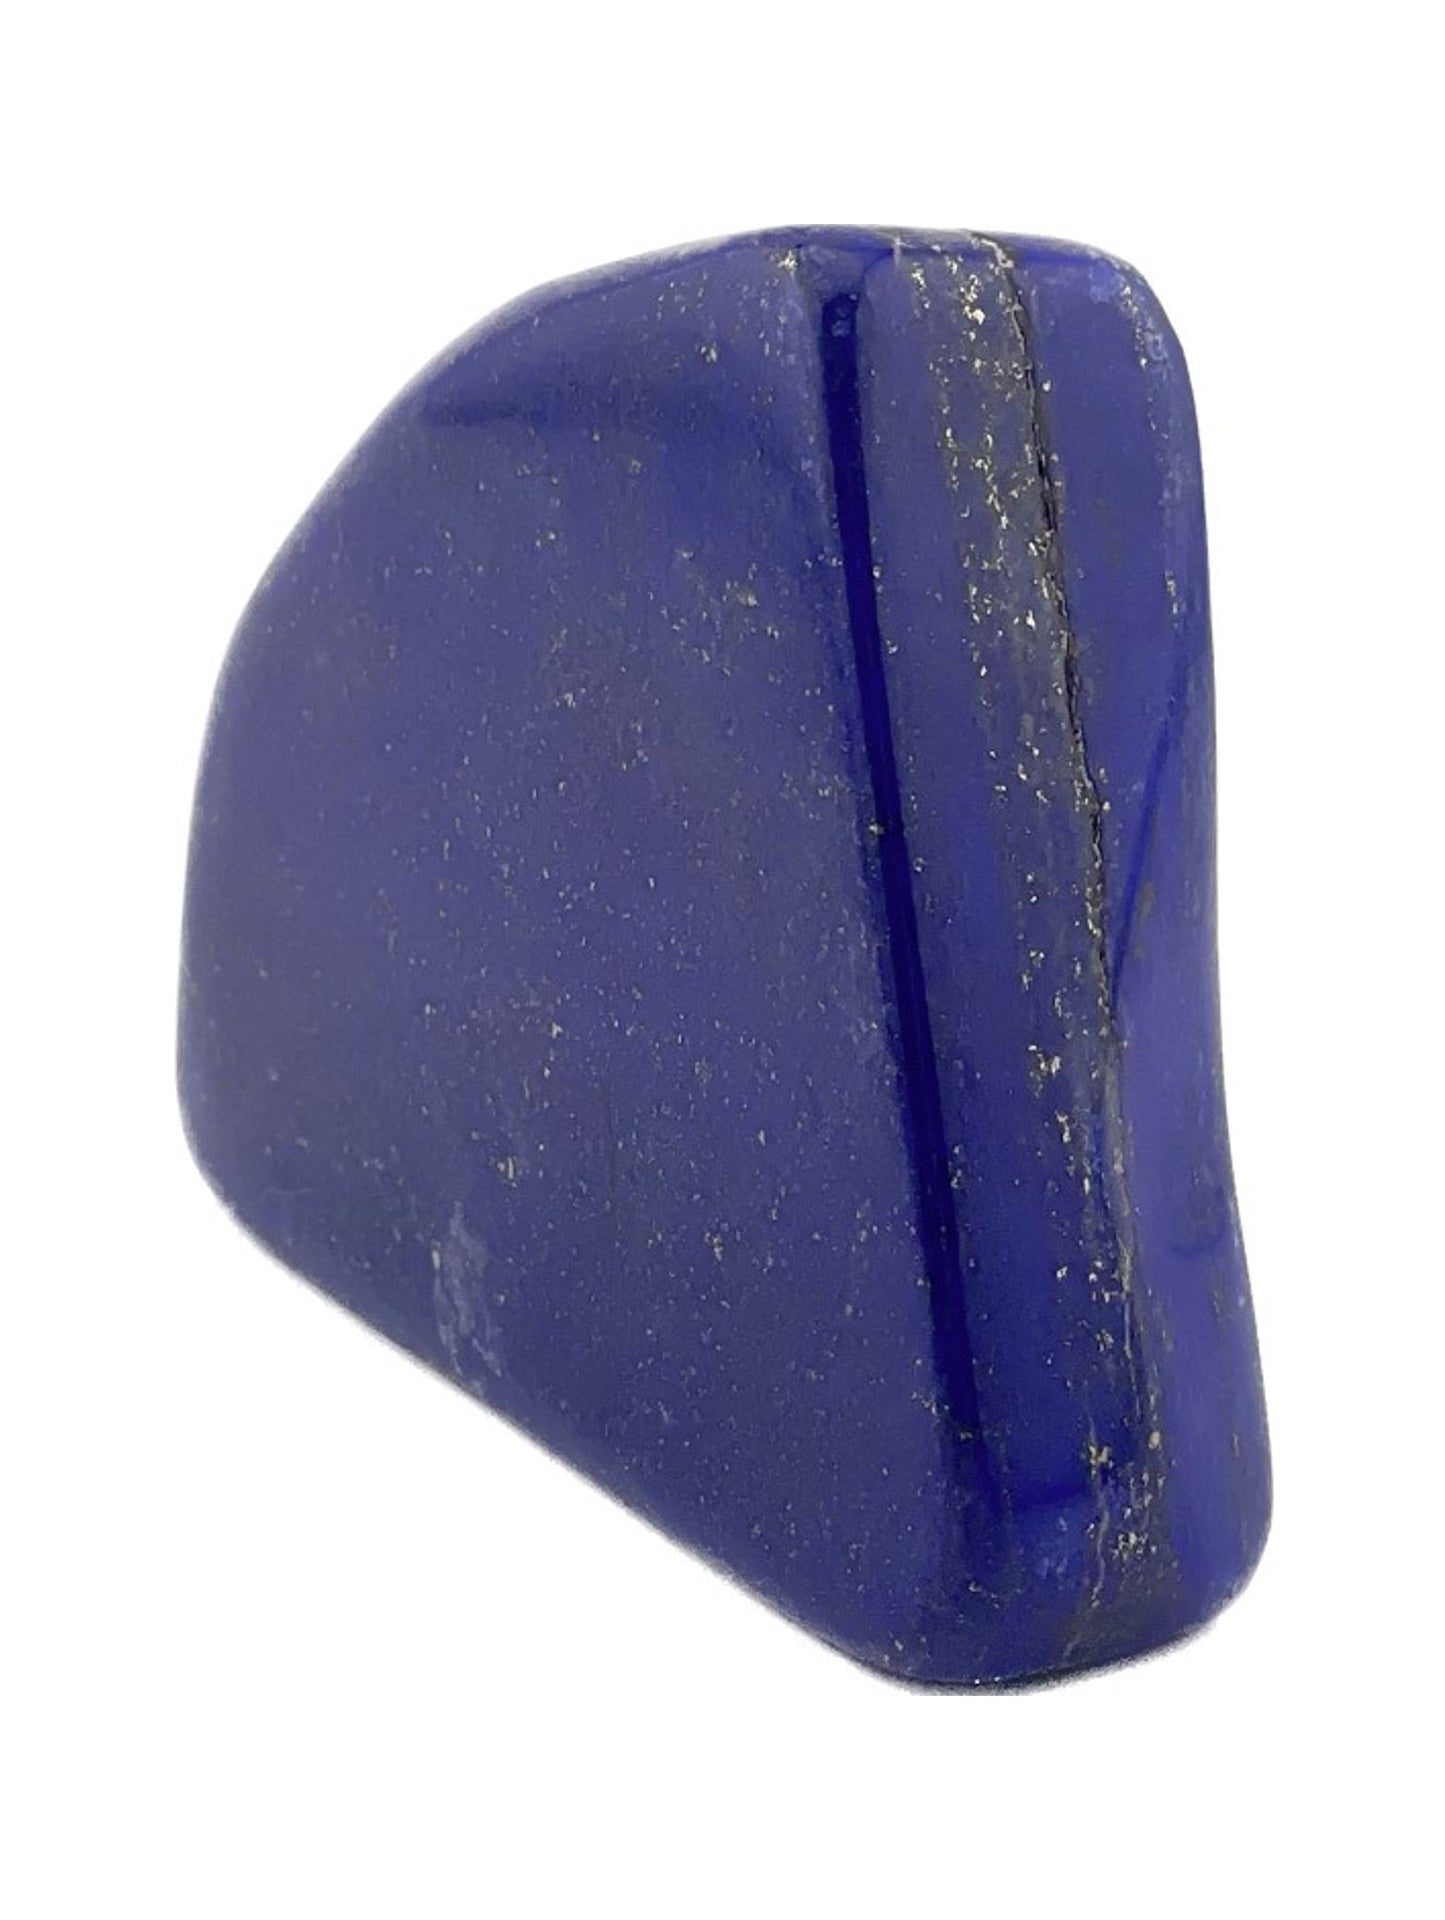 Lapis Lazuli - Free Form - L942